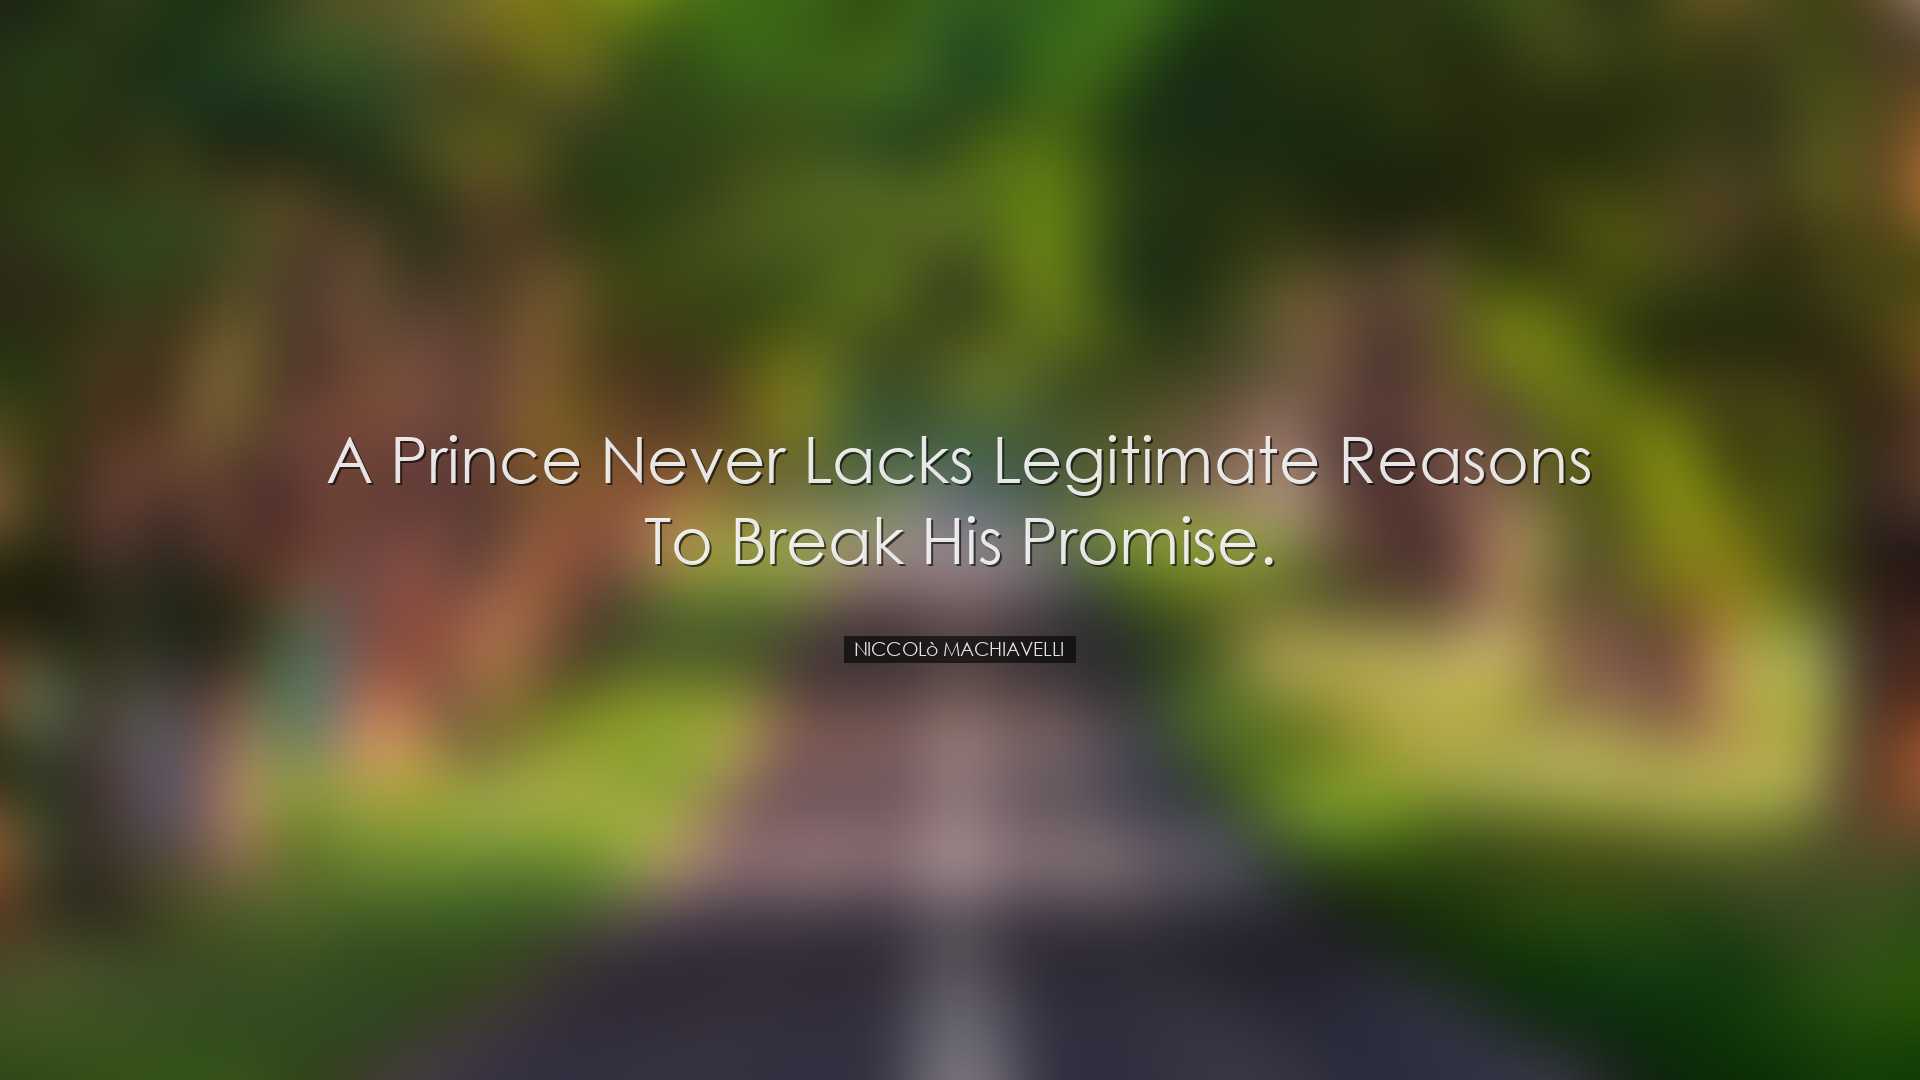 A prince never lacks legitimate reasons to break his promise. - Ni